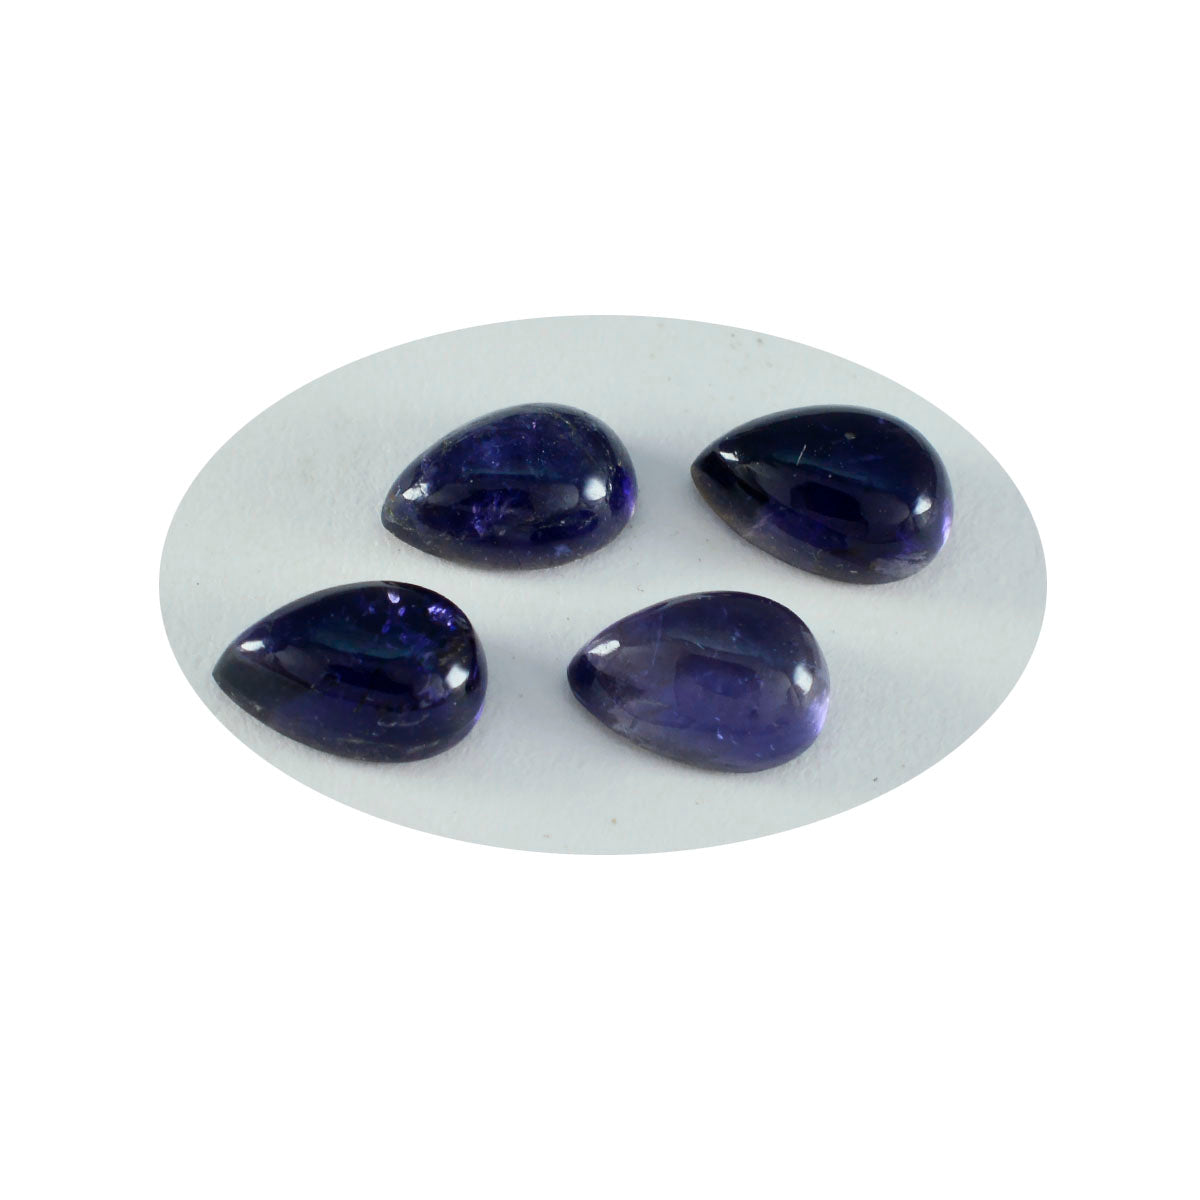 Riyogems 1PC Blue Iolite Cabochon 6x9 mm Pear Shape sweet Quality Gemstone